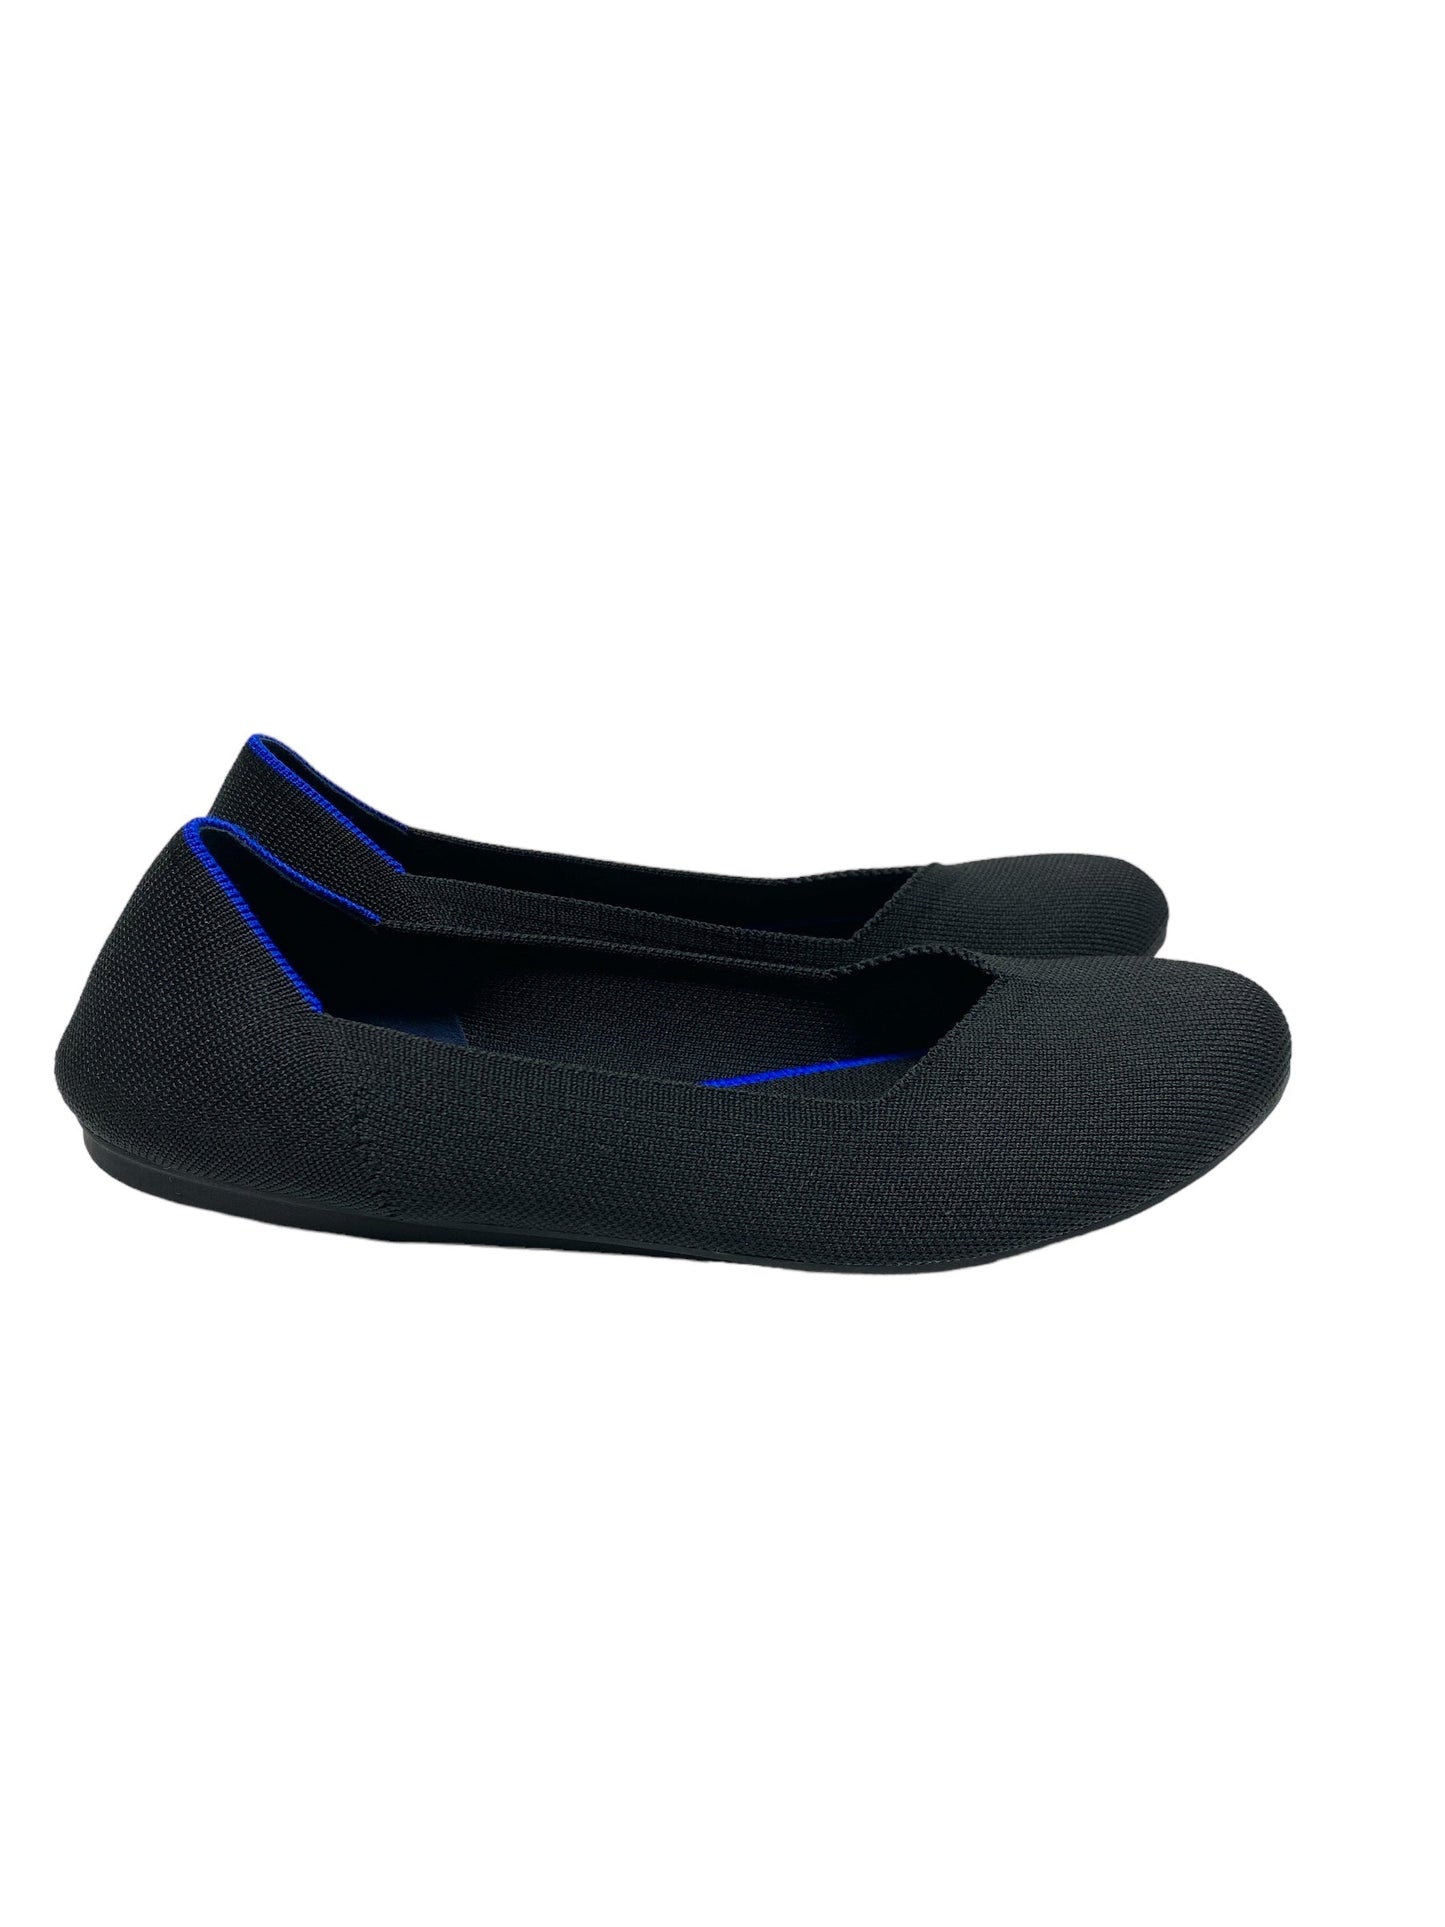 Black Shoes Flats Rothys, Size 11